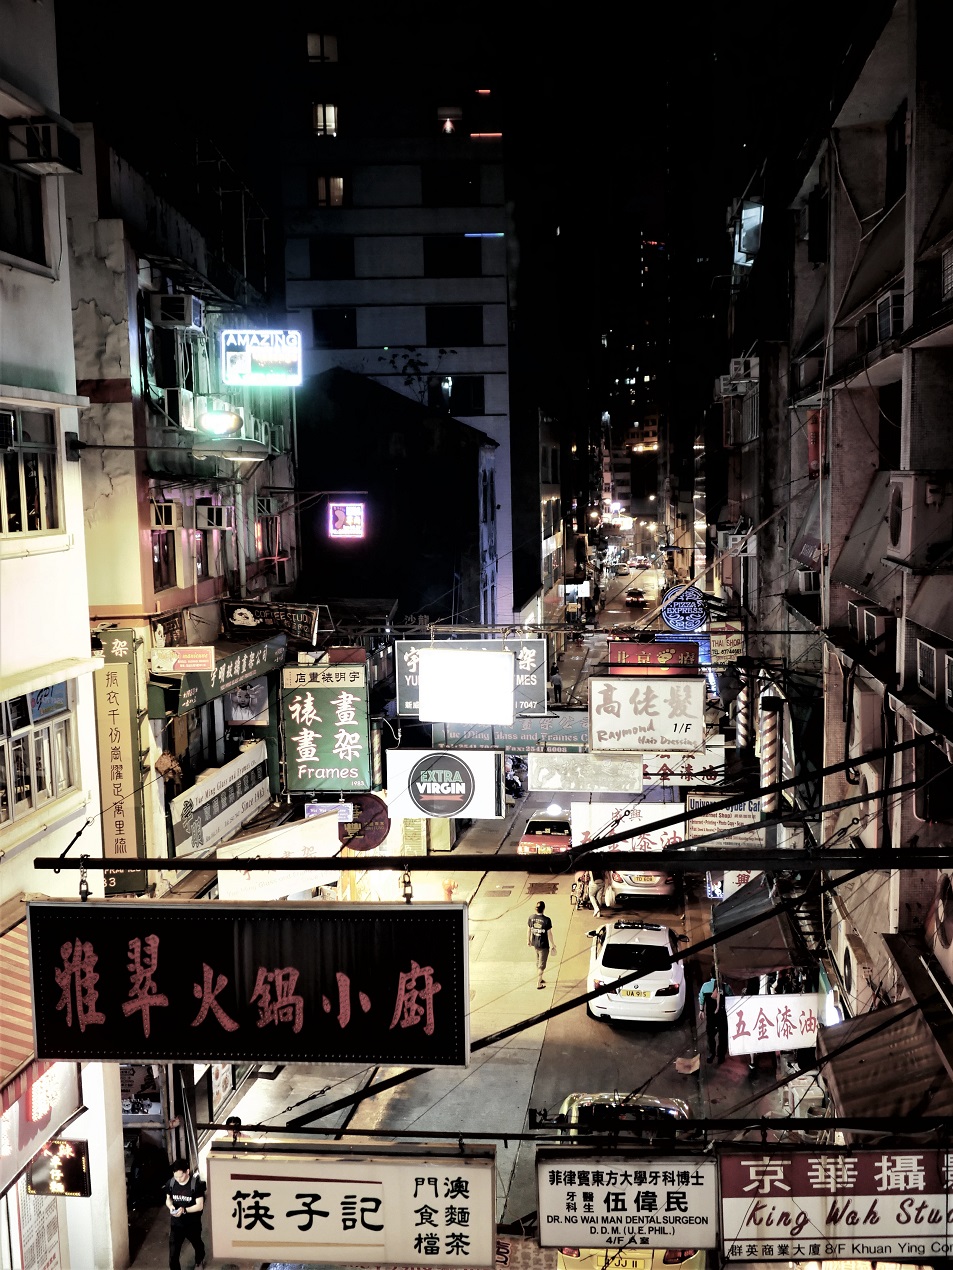 3 days in Hong Kong – My picks